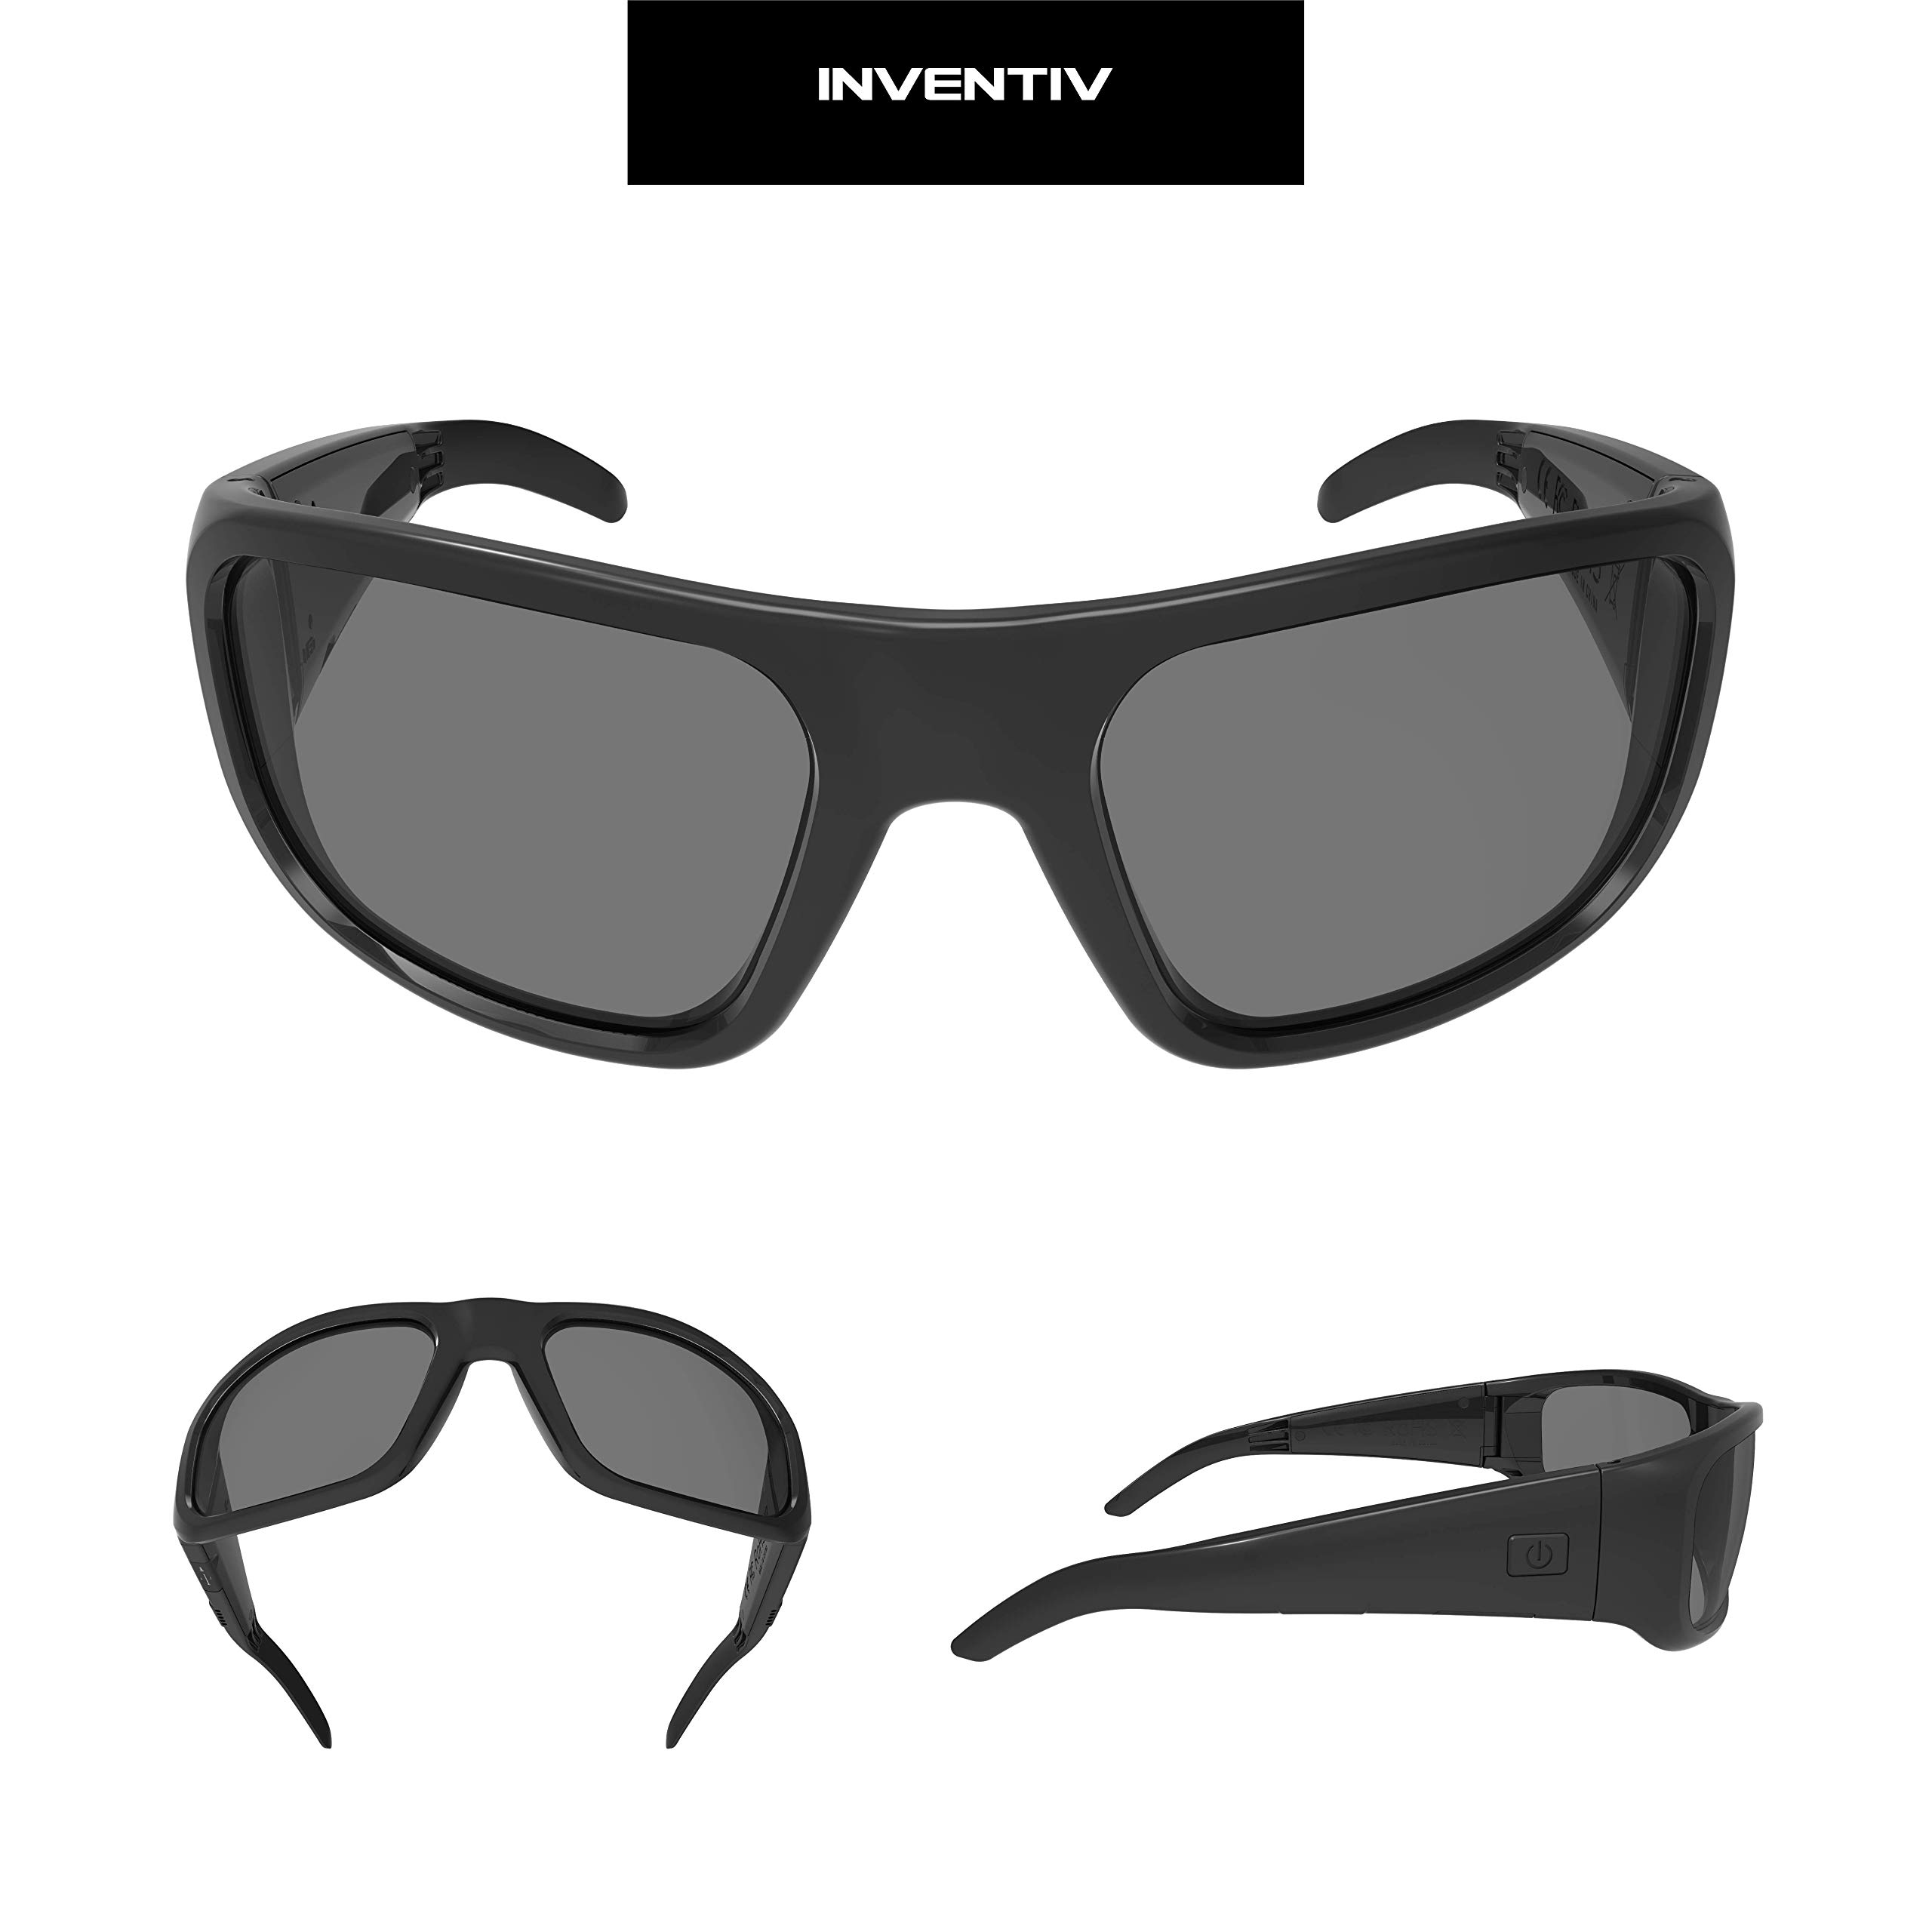 Inventiv Sport Wireless Bluetooth Audio Sunglasses Open Ear Headphones Music Hands-Free Calling, Men Women Polarized Glasses